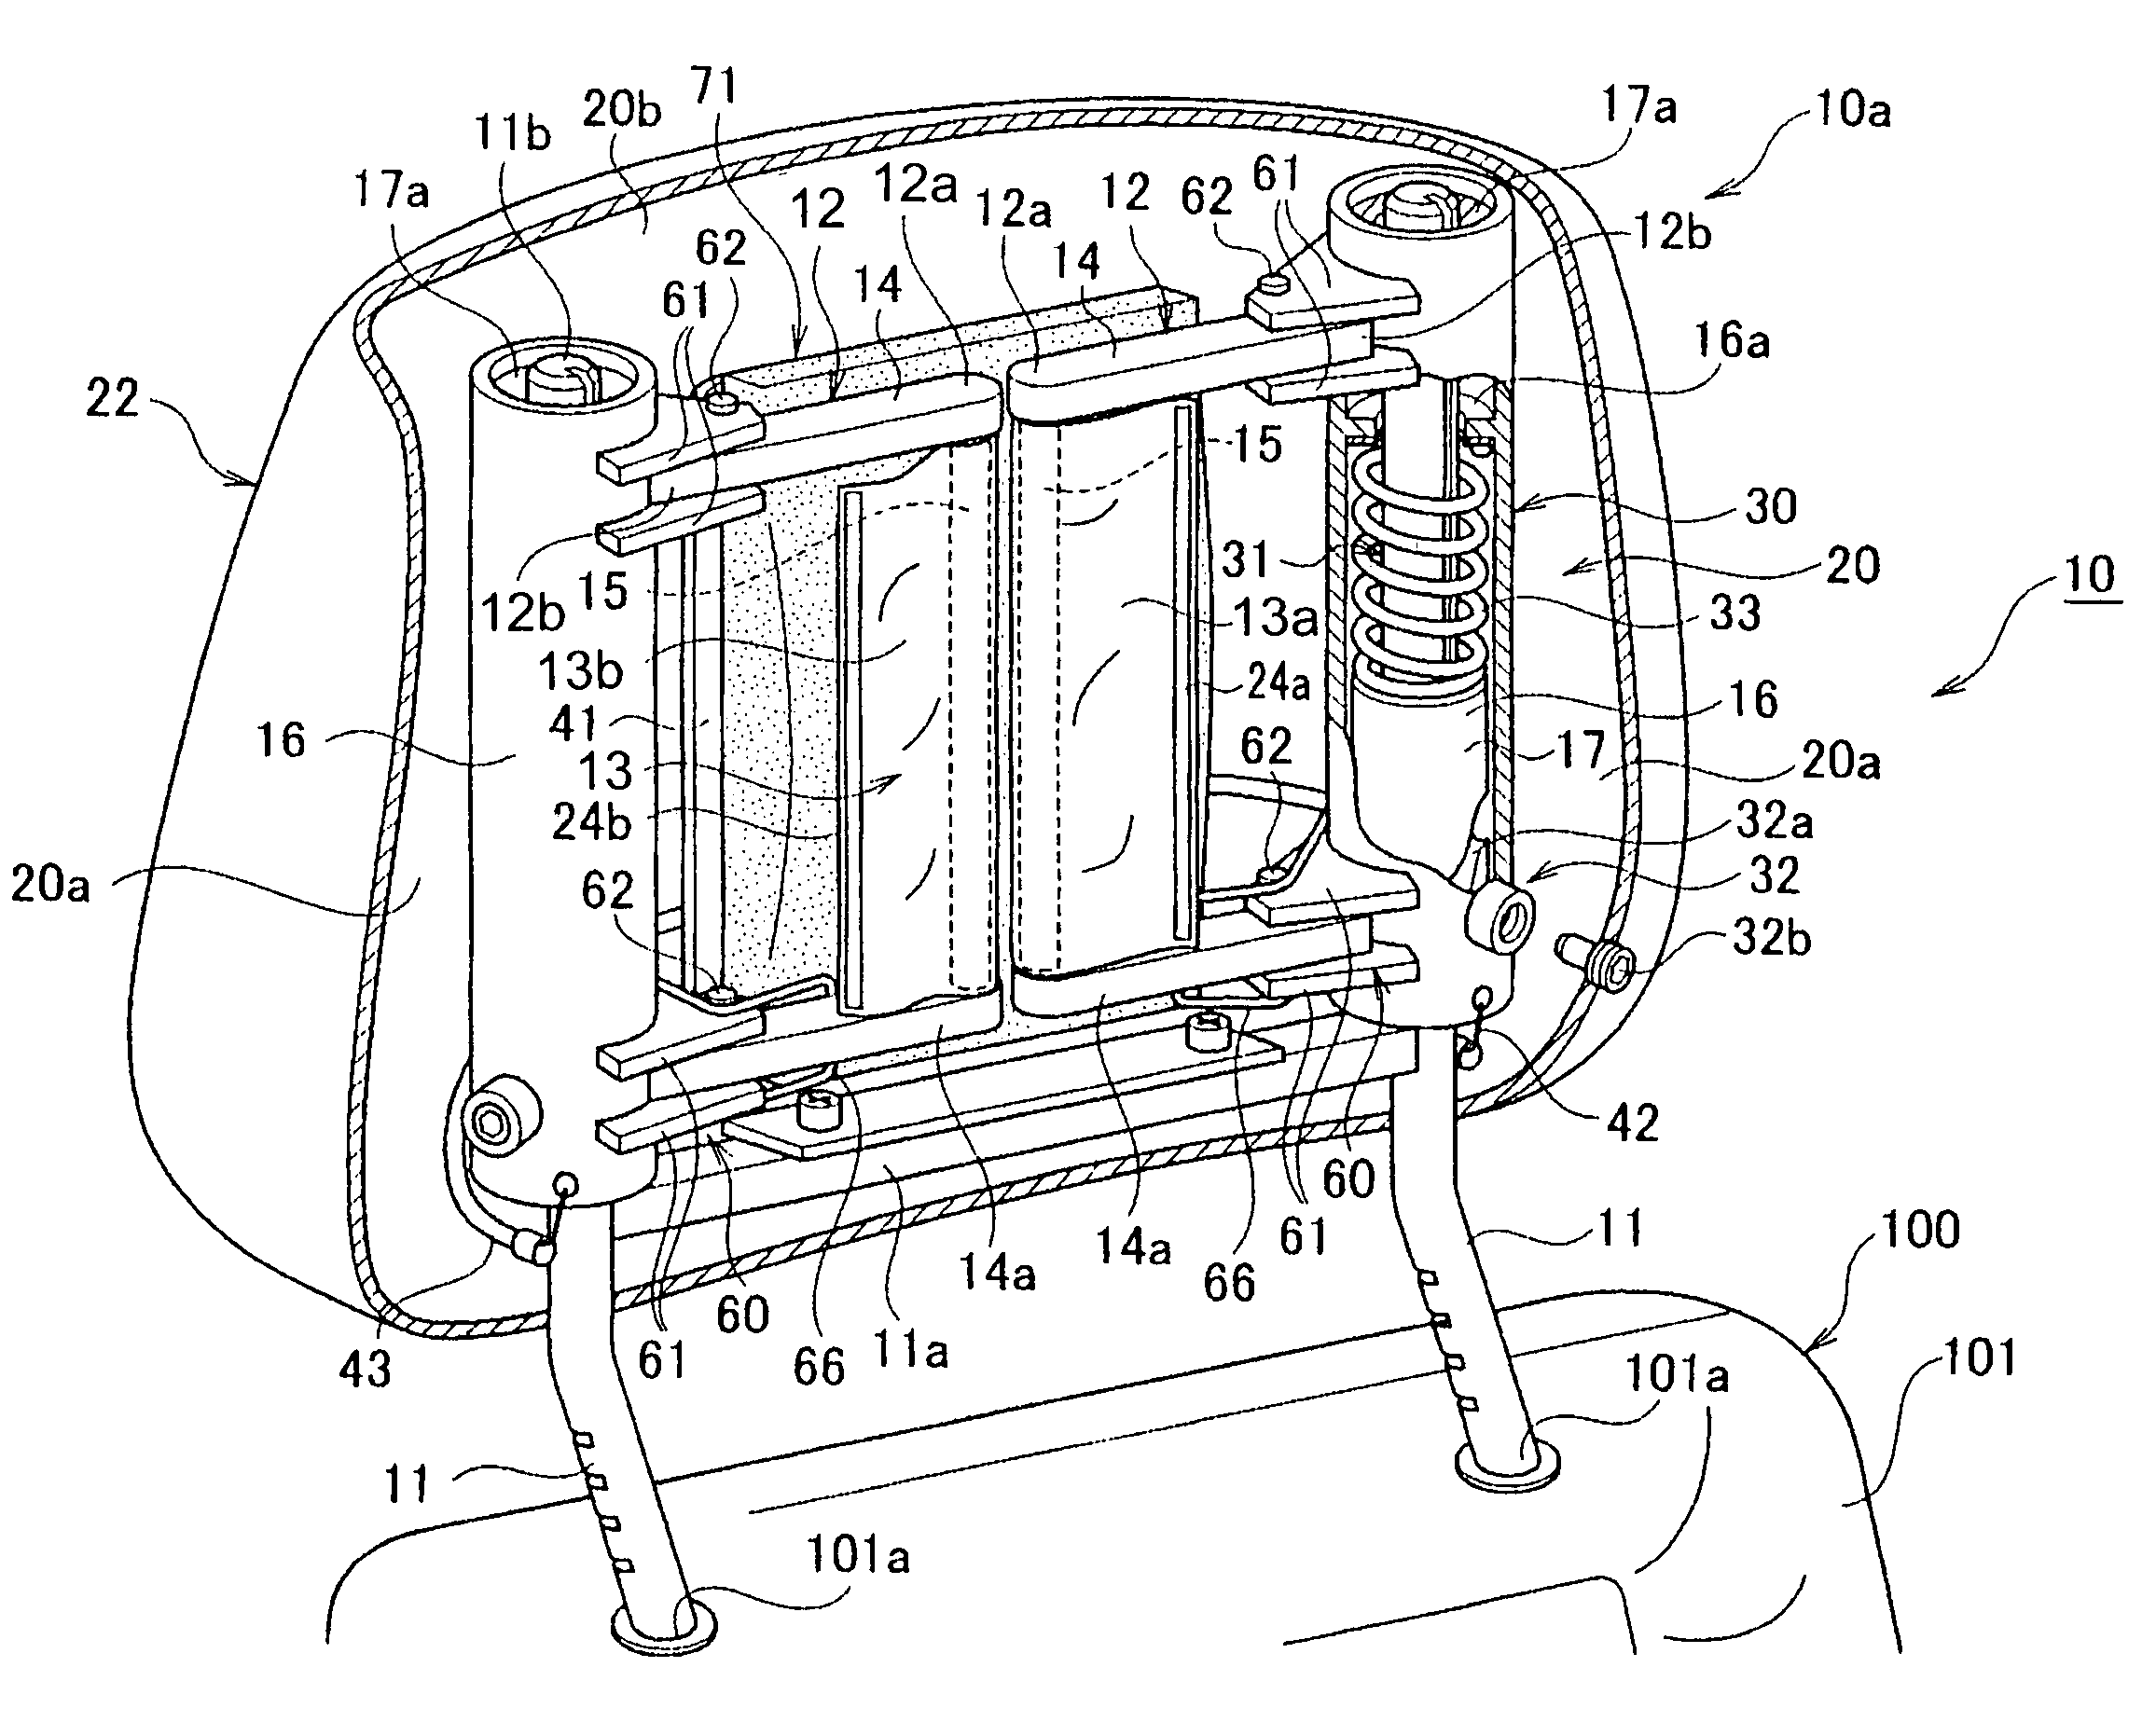 Vehicle headrest apparatus